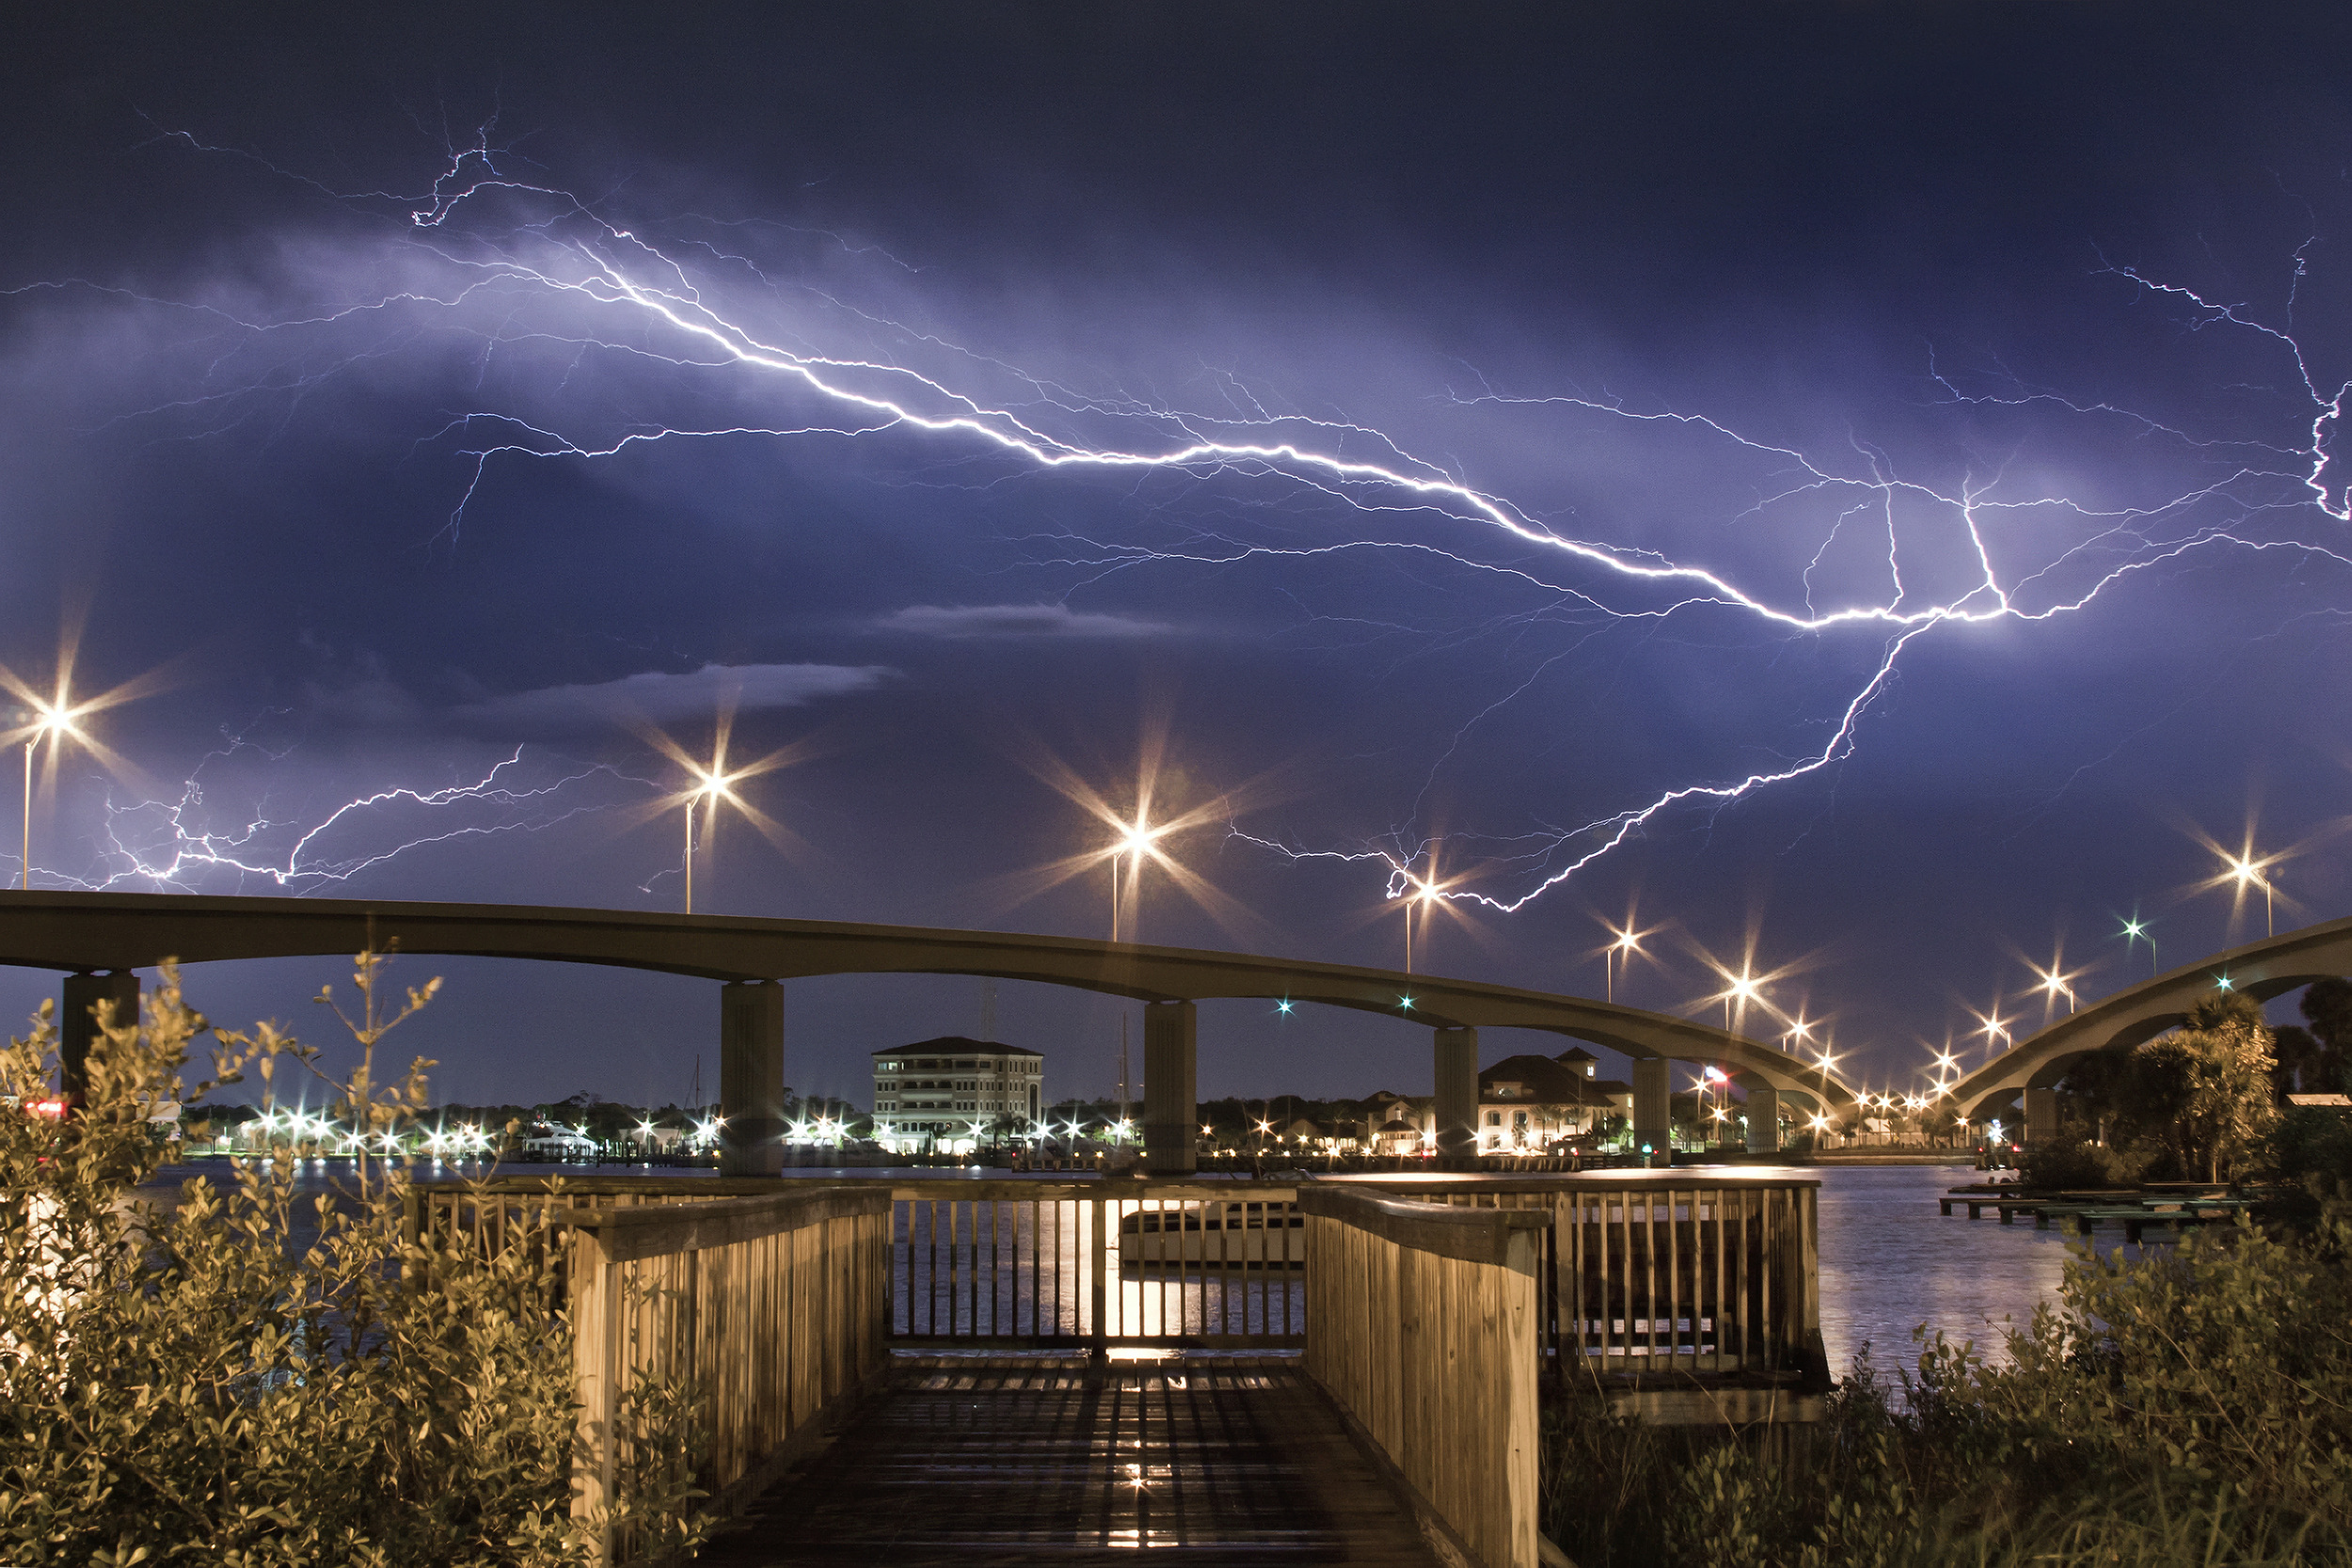  Lightning over the Seabreeze Bridge in Daytona Beach, Florida on April 25, 2010 